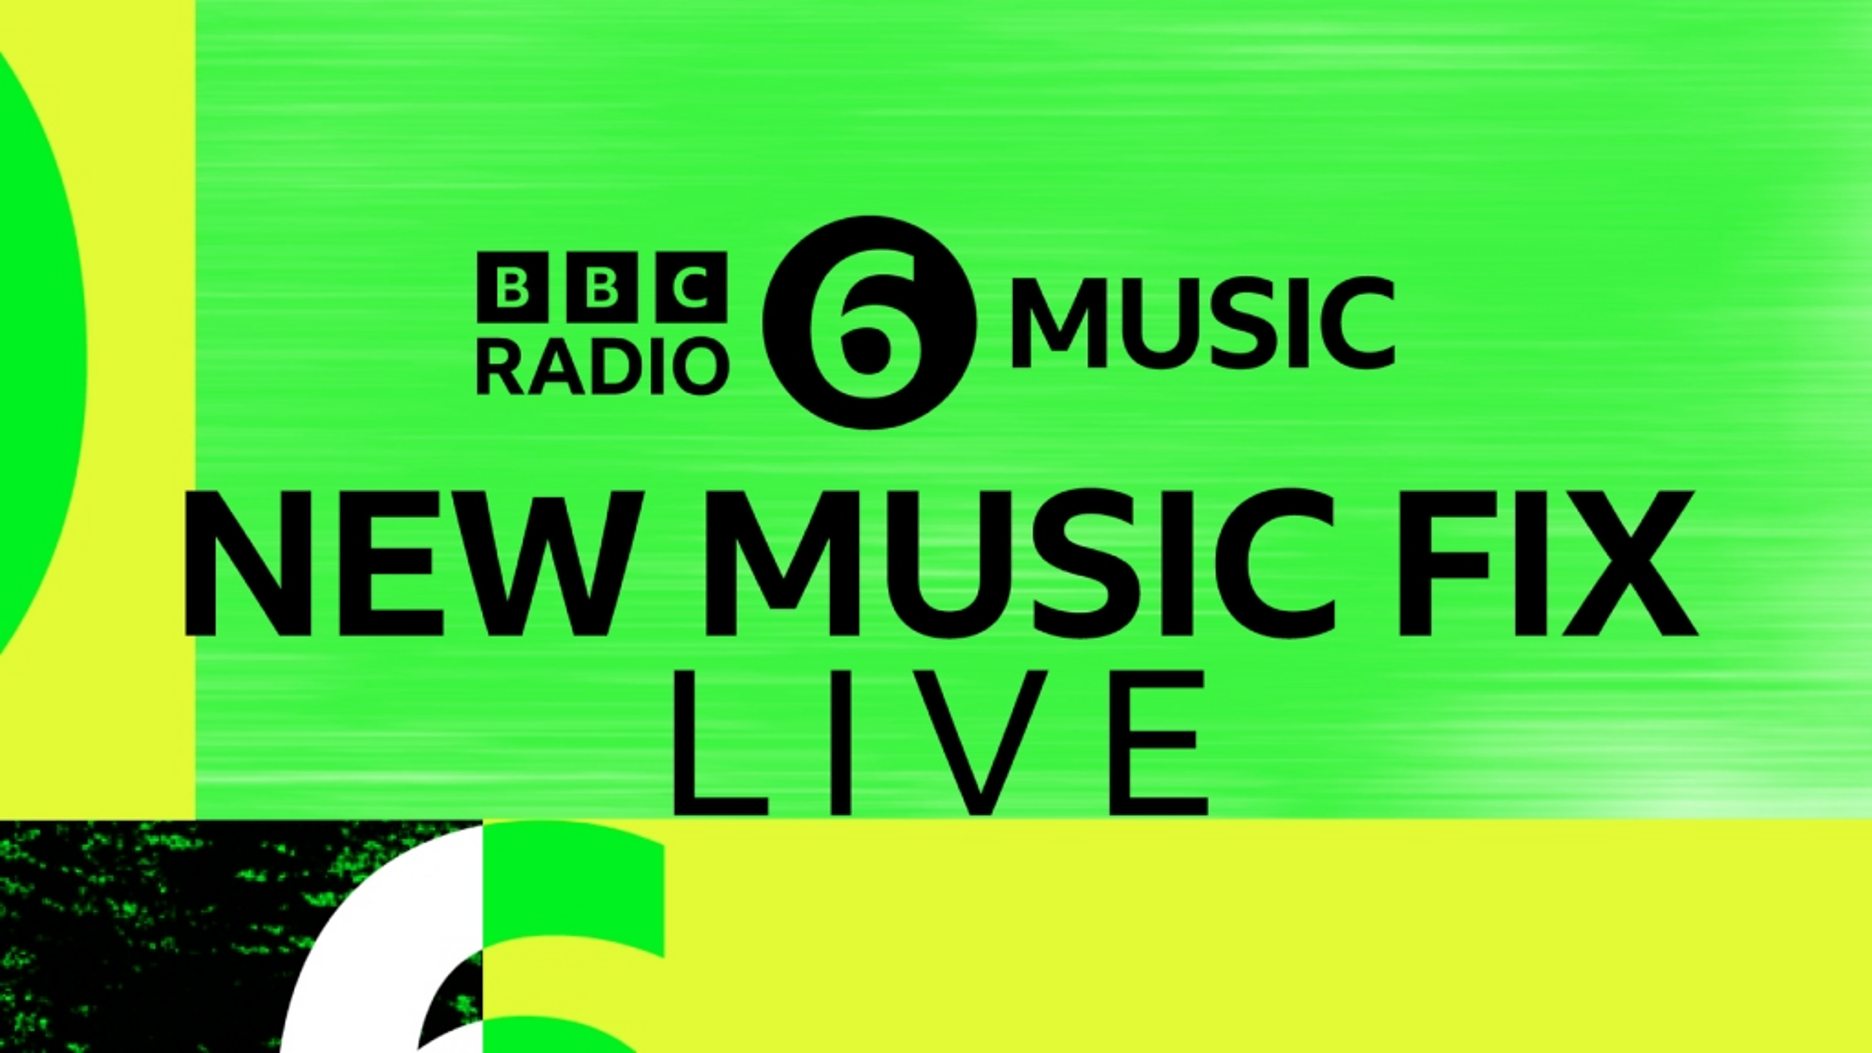 BBC Radio 6 Music presents New Music Fix Live in Glasgow this November